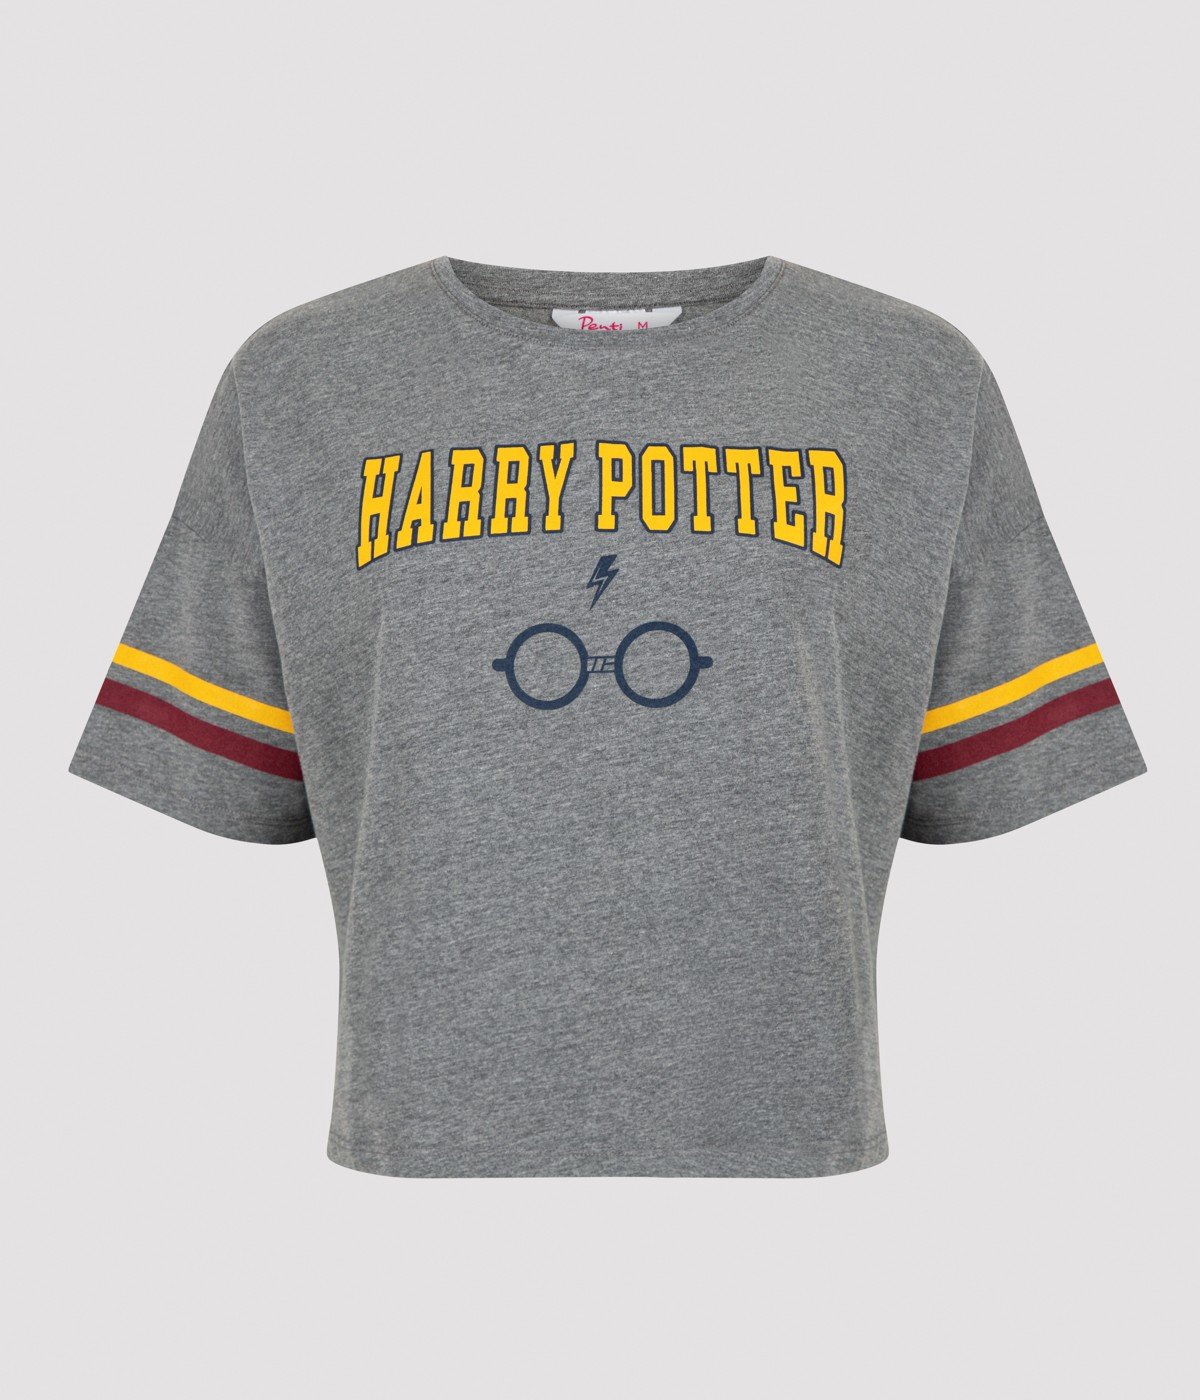 HP Harry Potter Tshirt